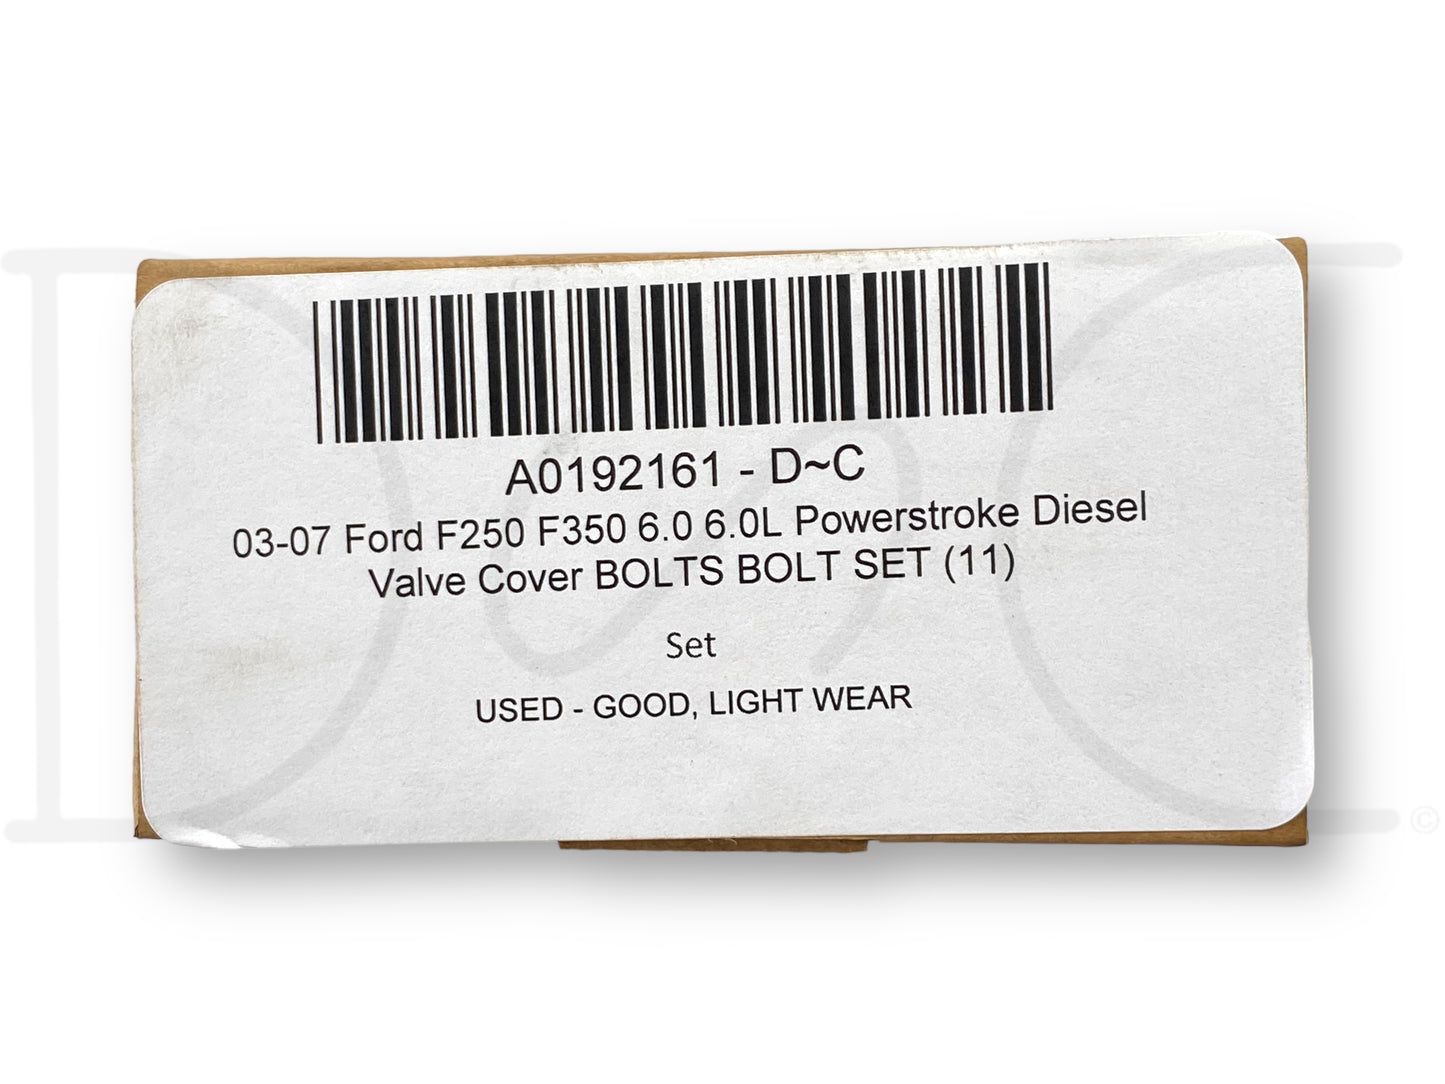 03-07 Ford F250 F350 6.0 6.0L Powerstroke Diesel Valve Cover Bolts Bolt Set (11)